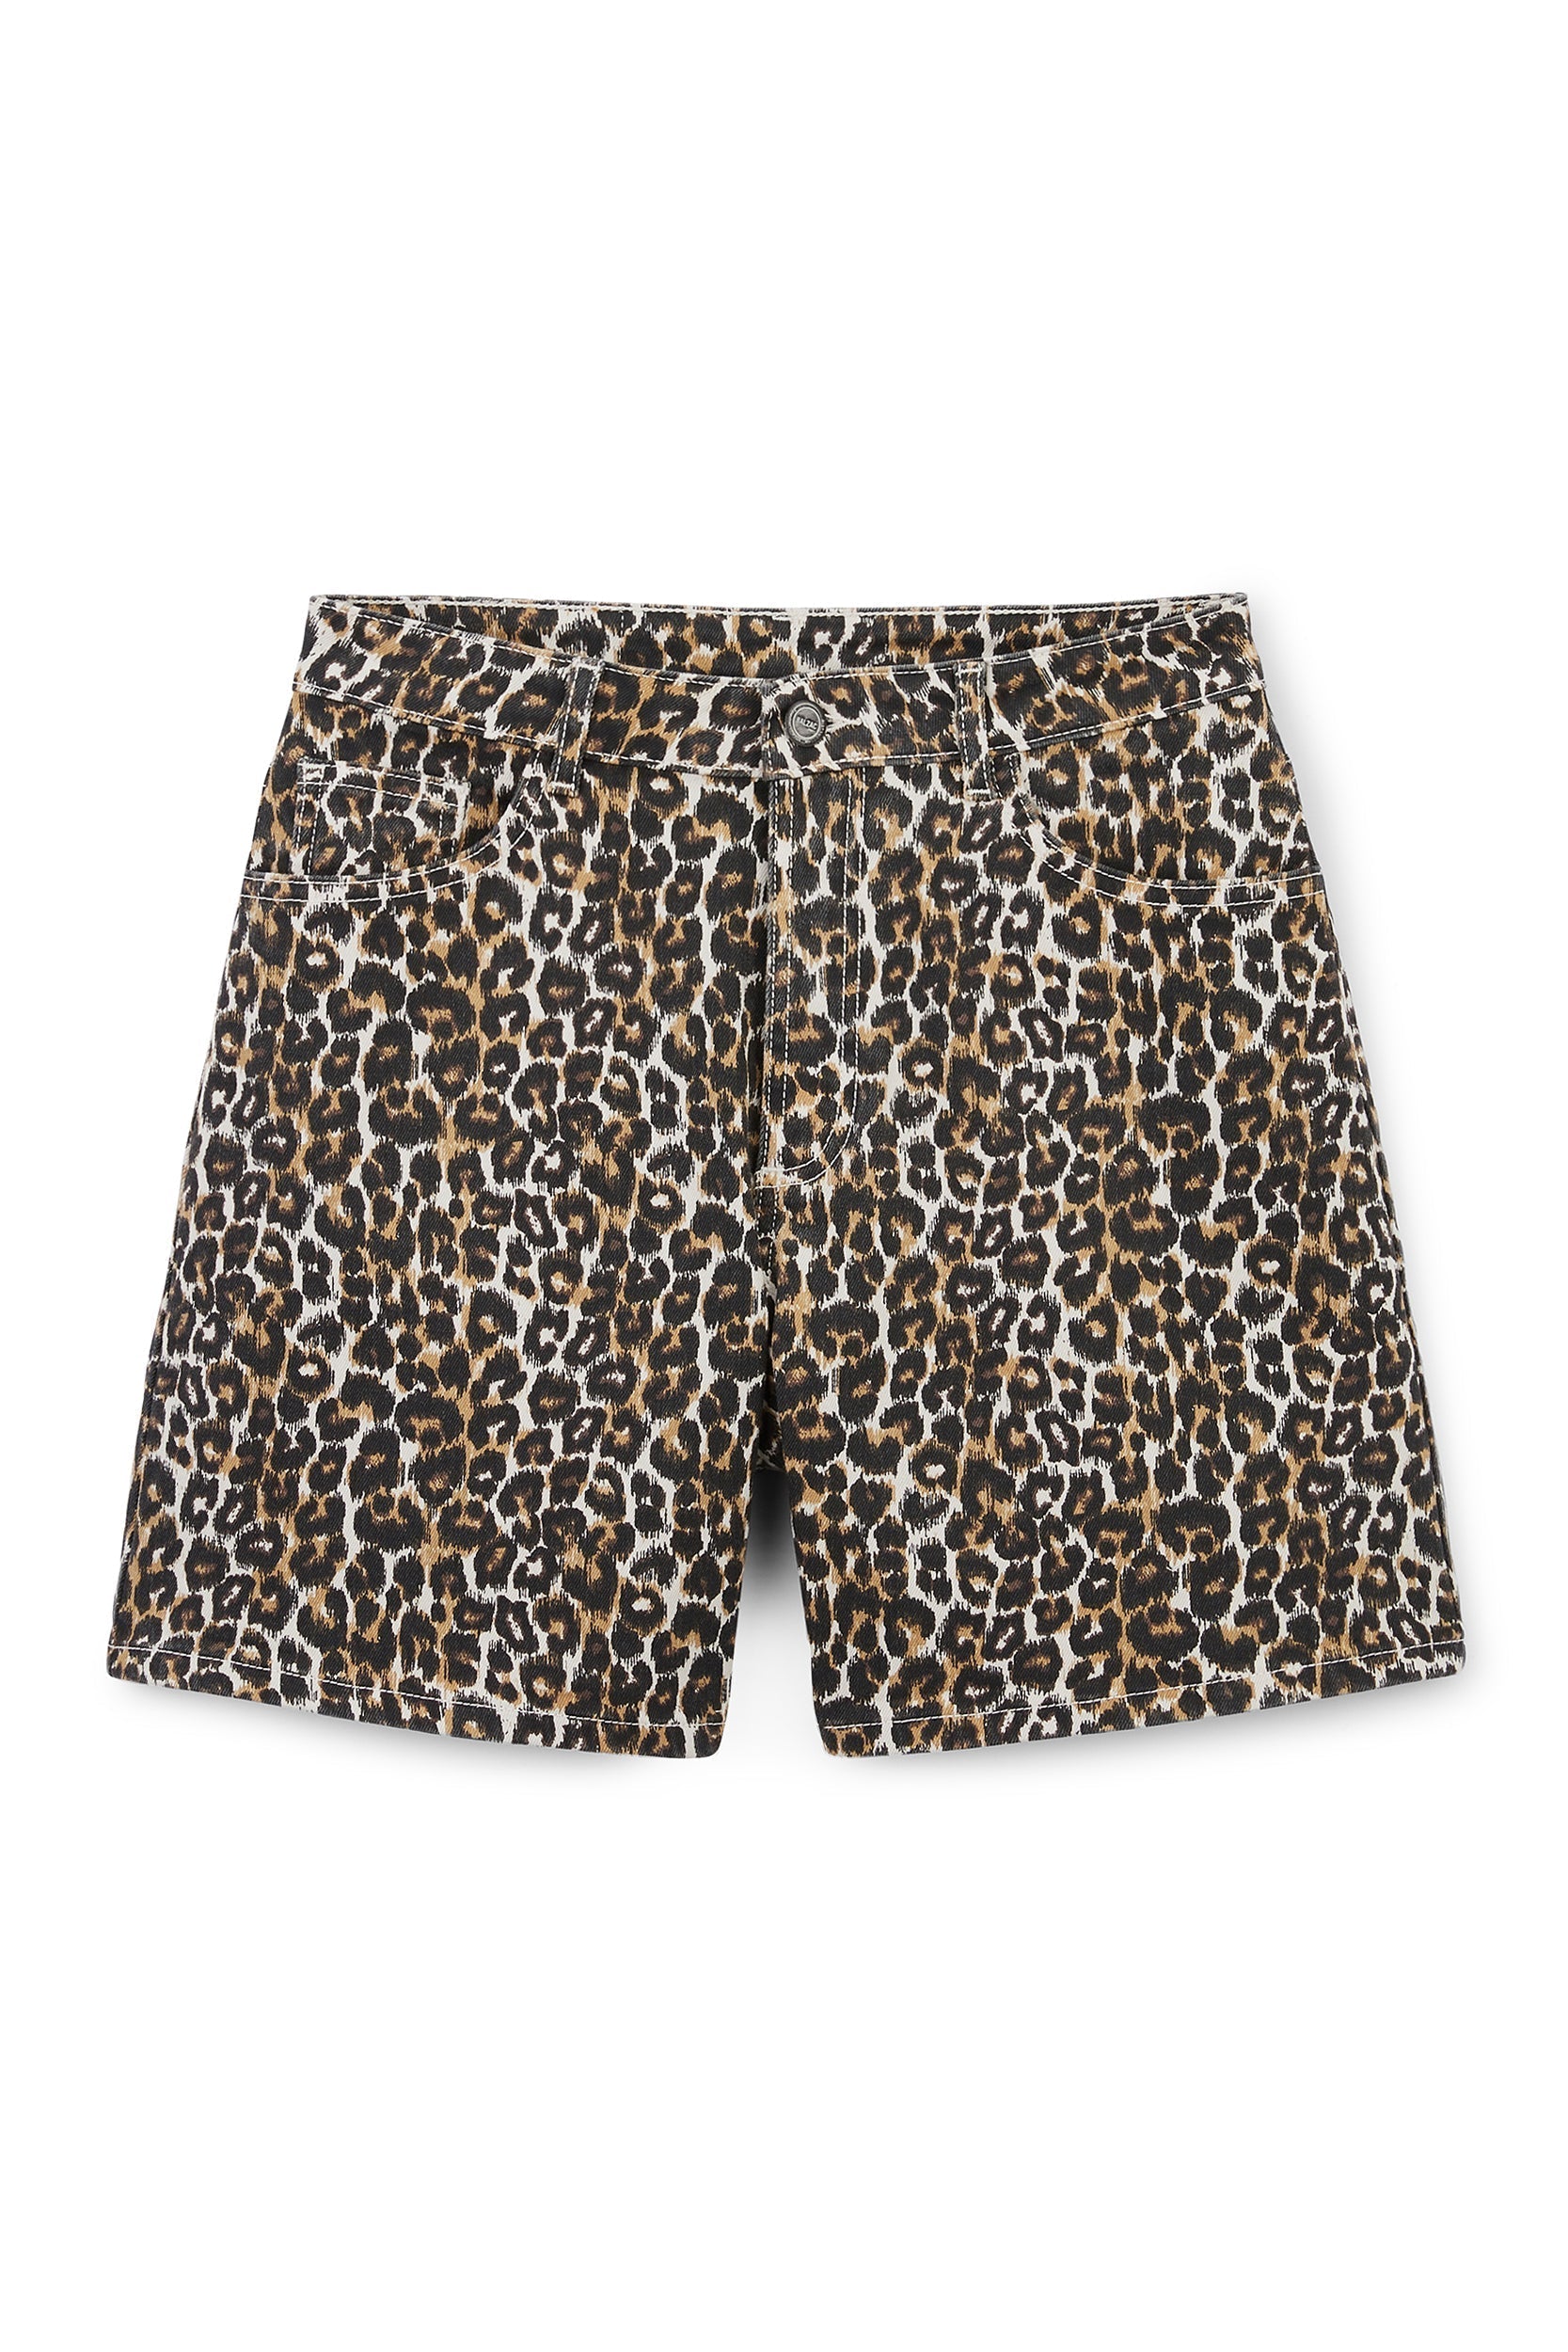 Maylone leopard shorts - Balzac Paris